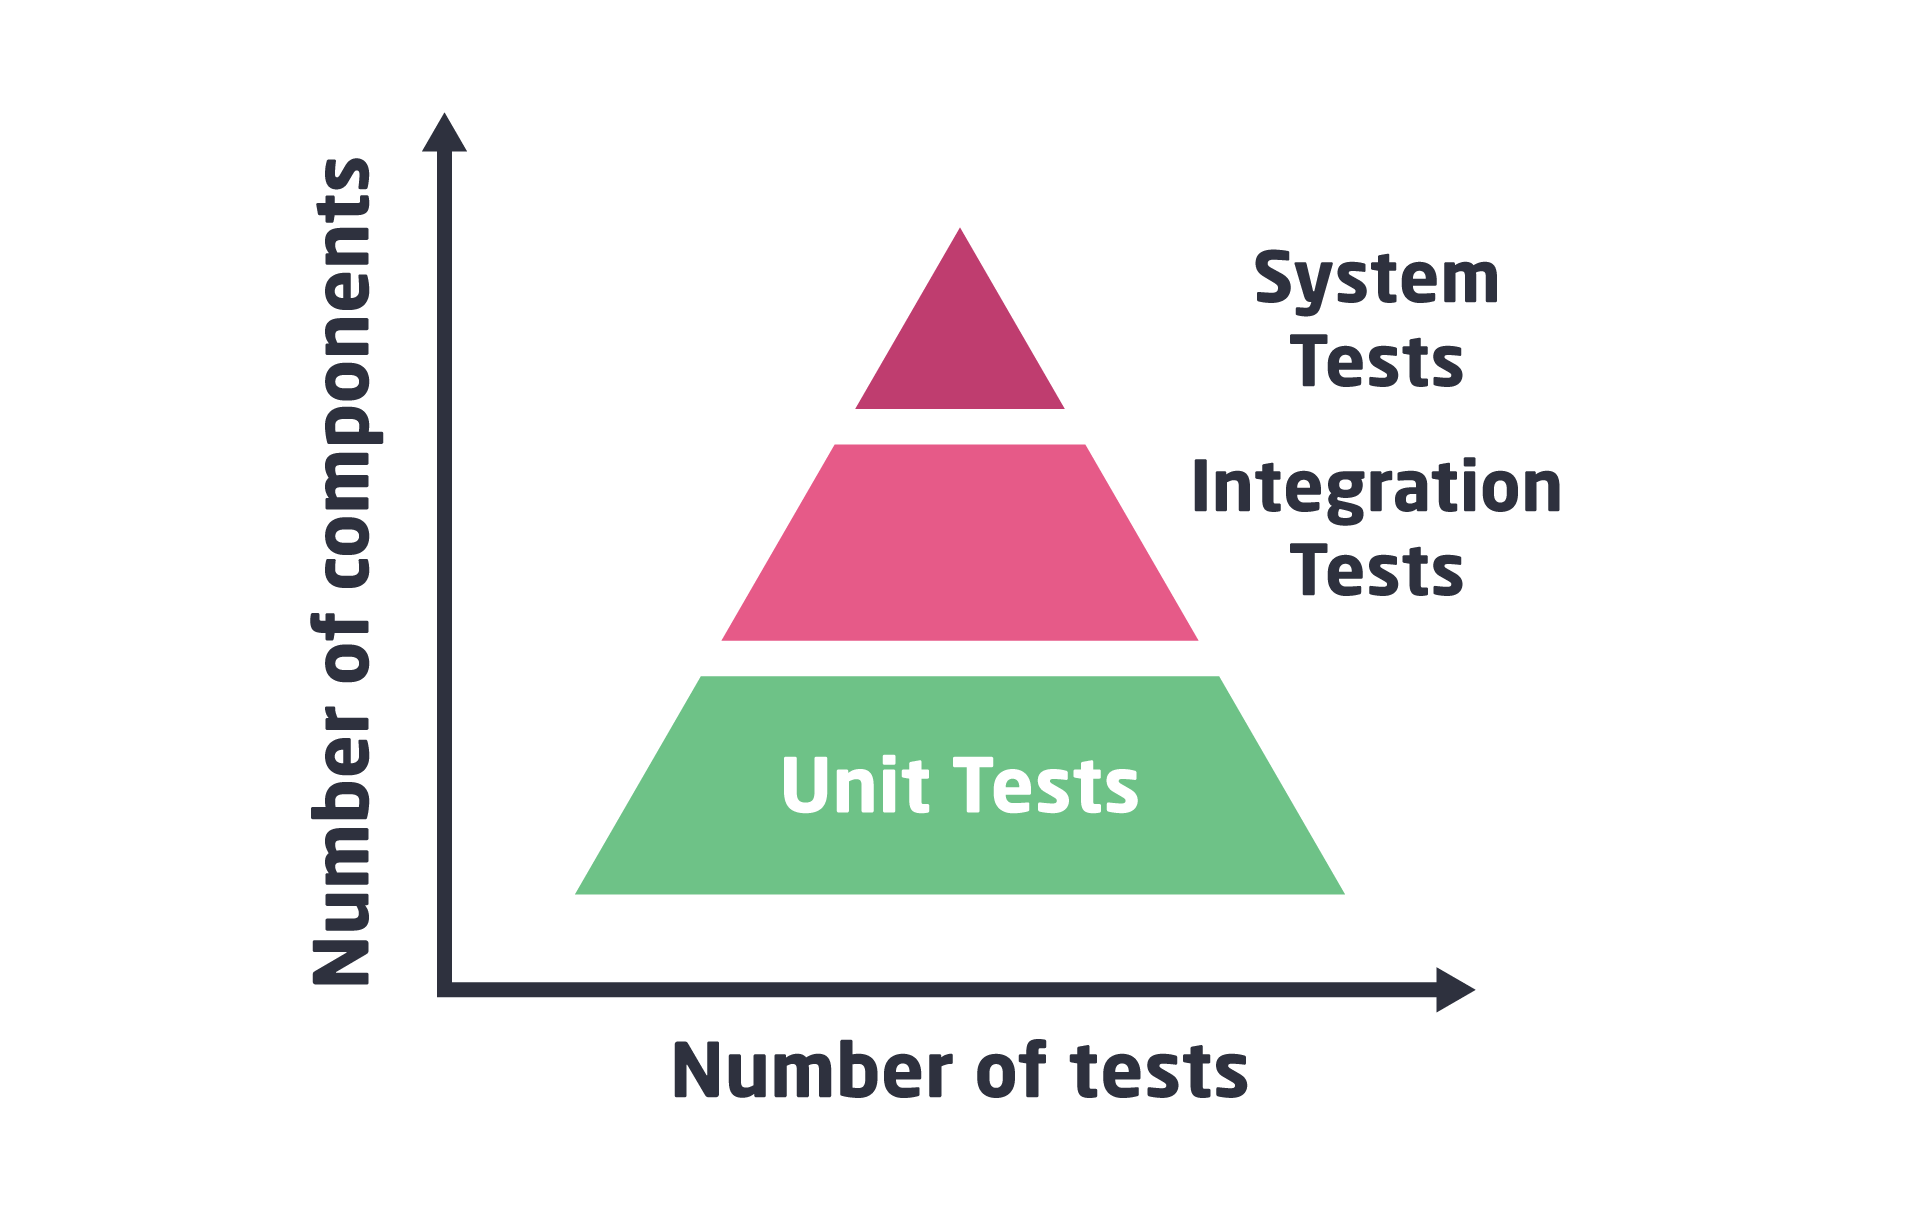 The testing pyramid